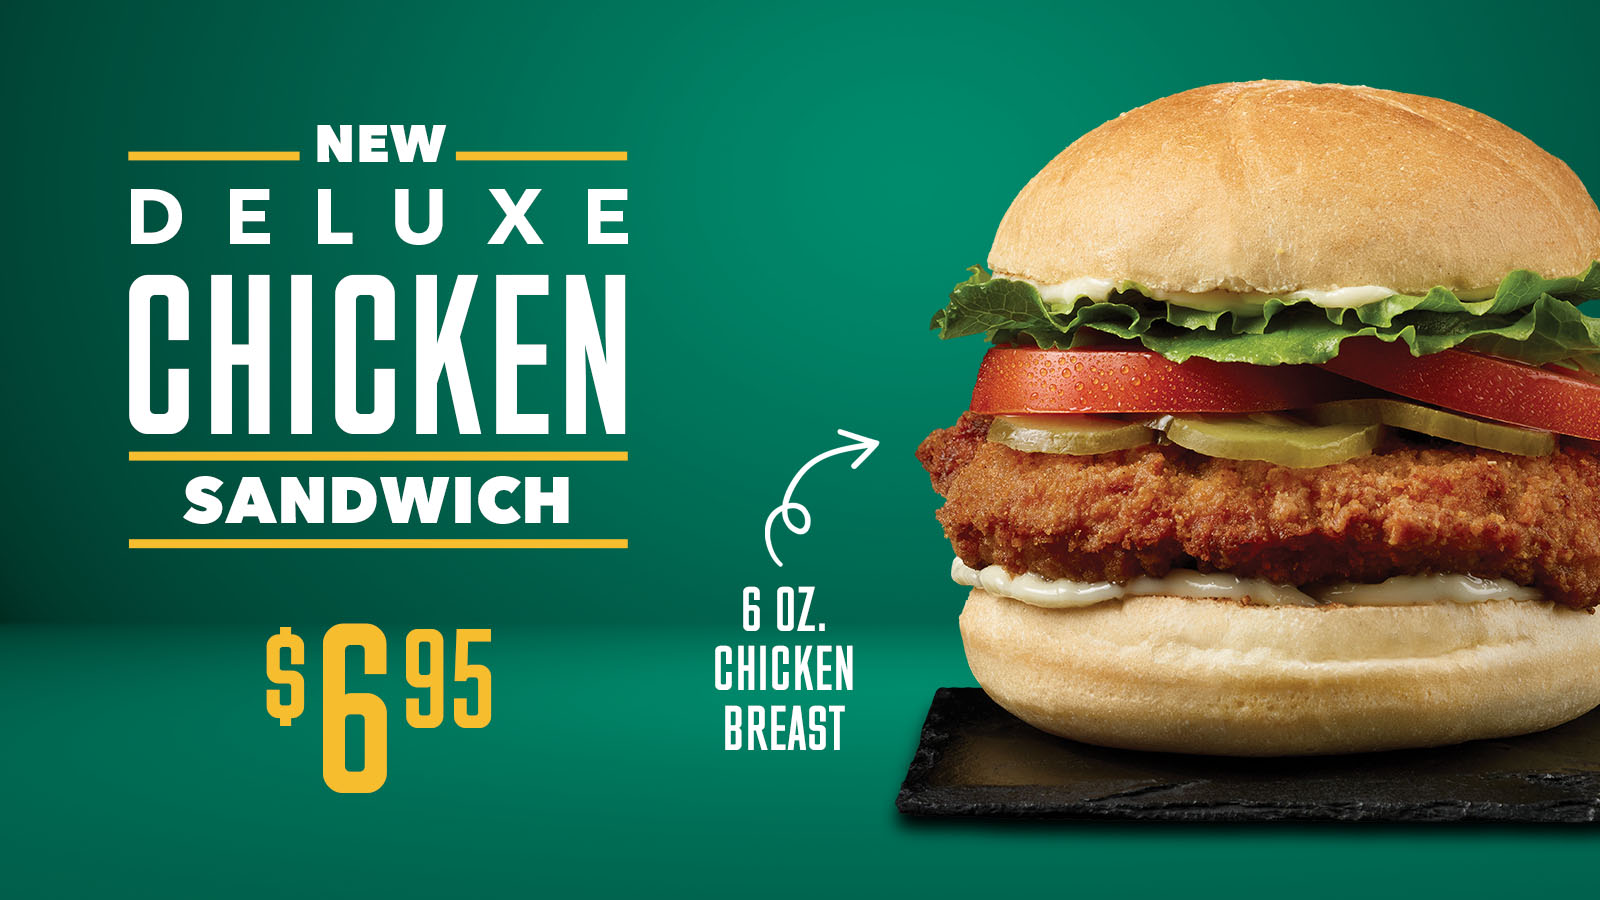 New Deluxe Chicken Sandwich for $6.95